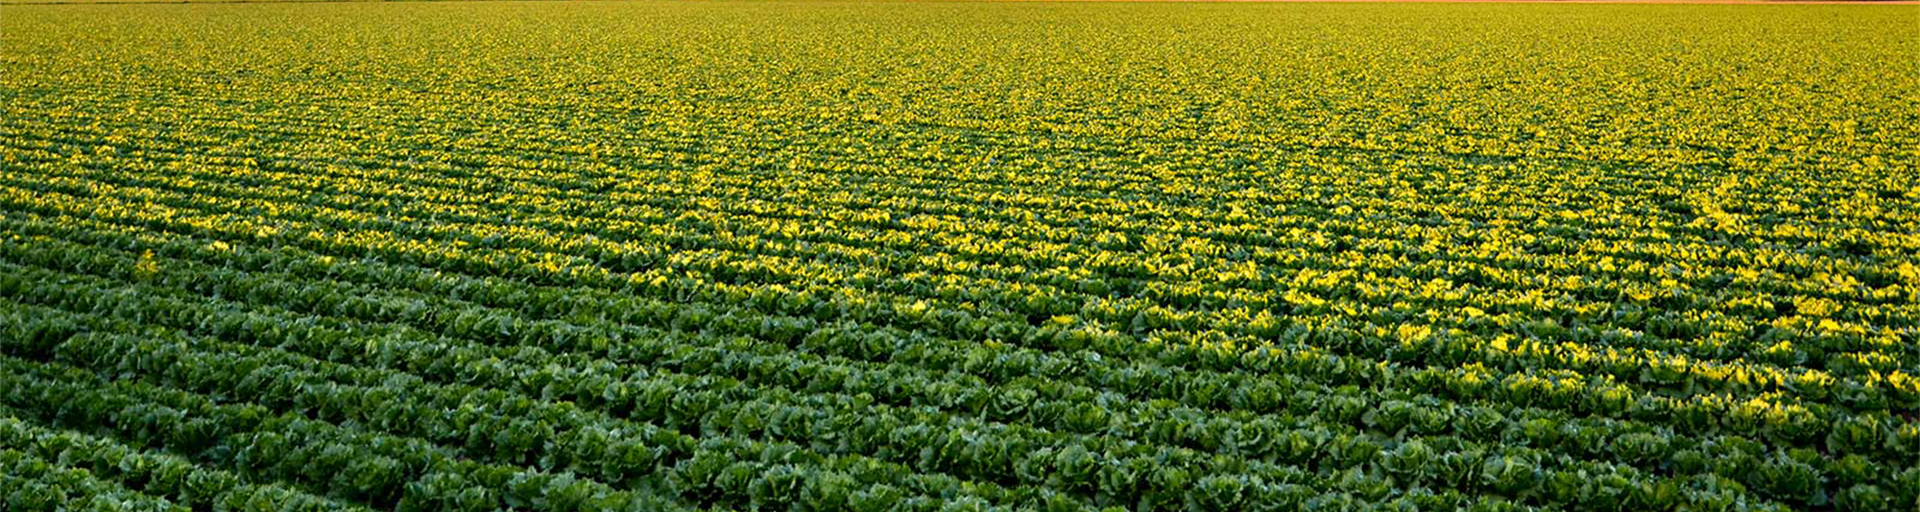 A field of crops